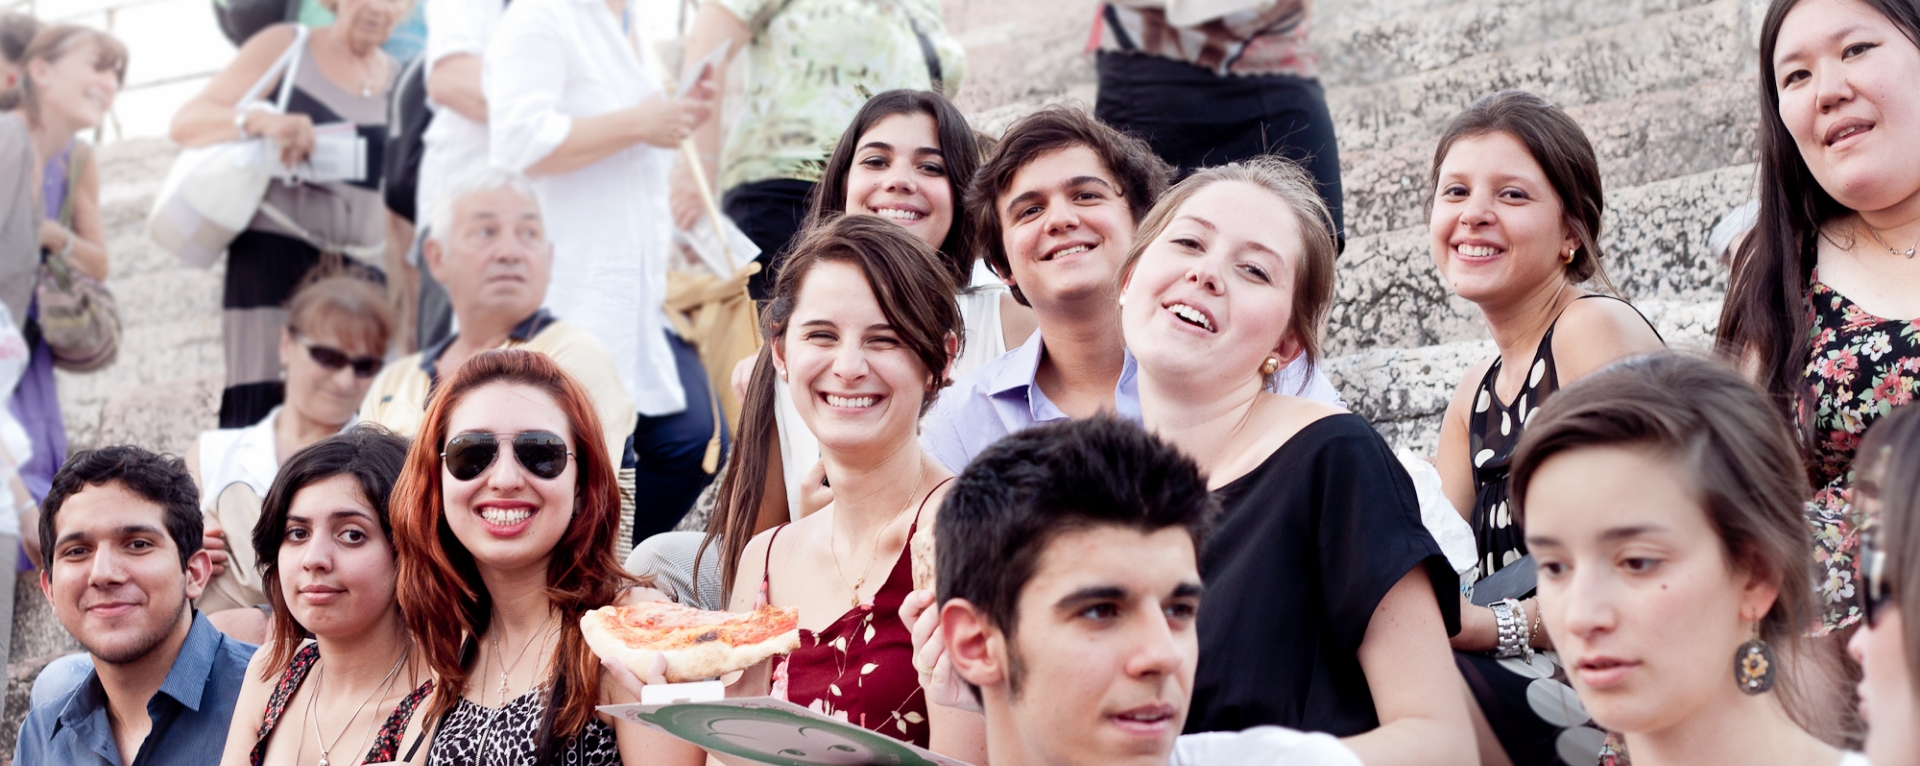 Gruppe ausländischer Studenten lächelt